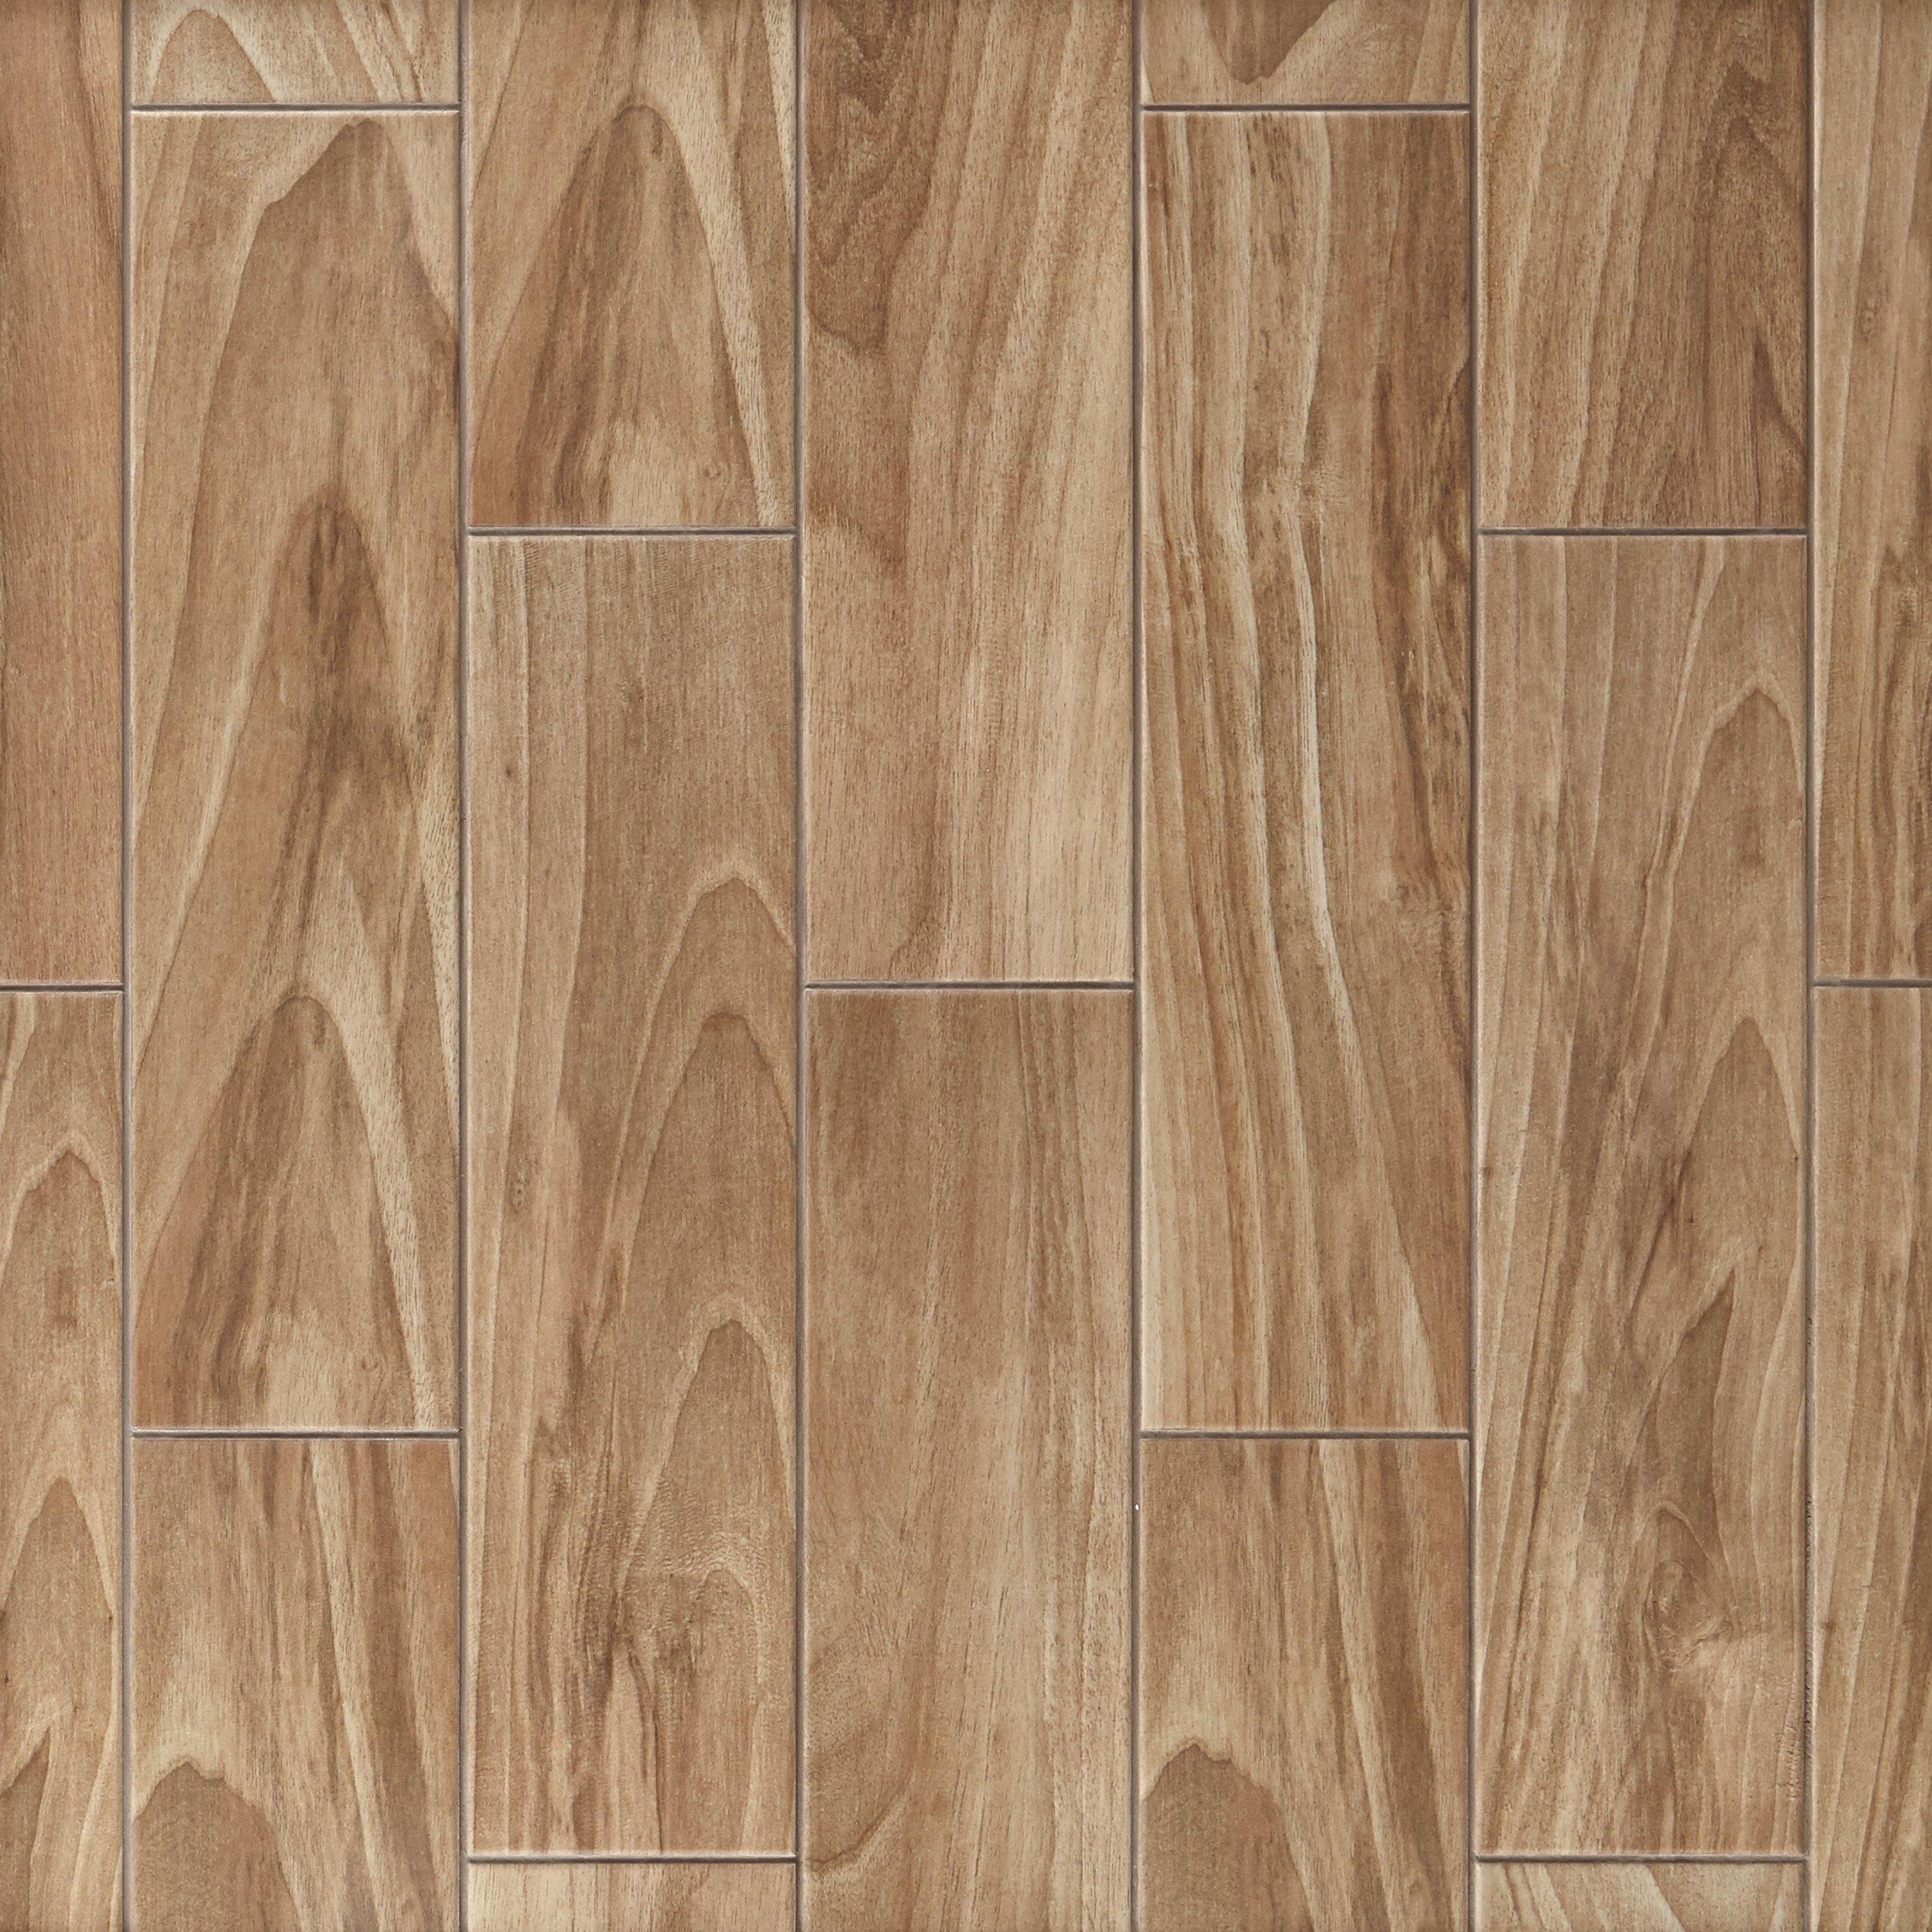 Wood Look Tile Floor Decor